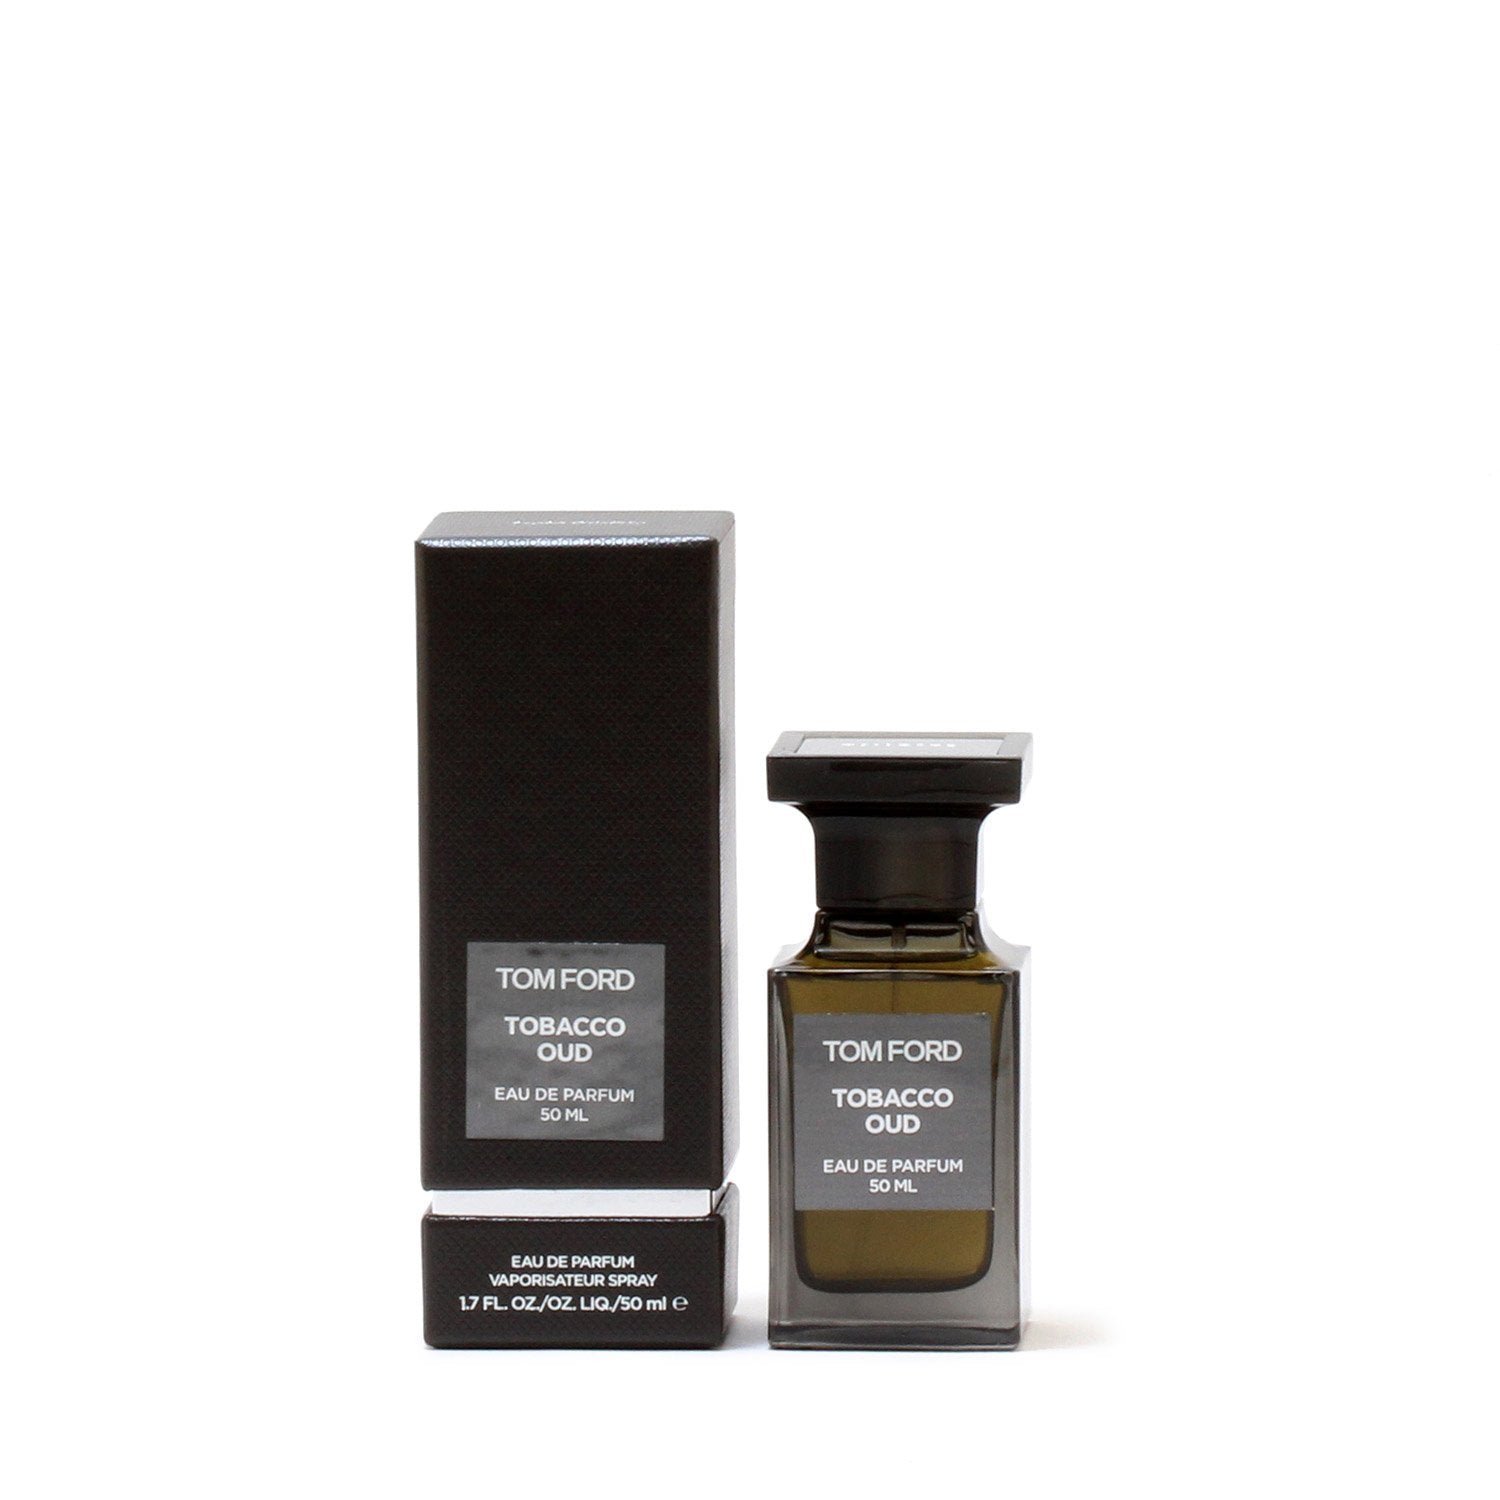 Perfume - TOM FORD TOBACCO OUD UNISEX - EAU DE PARFUM SPRAY